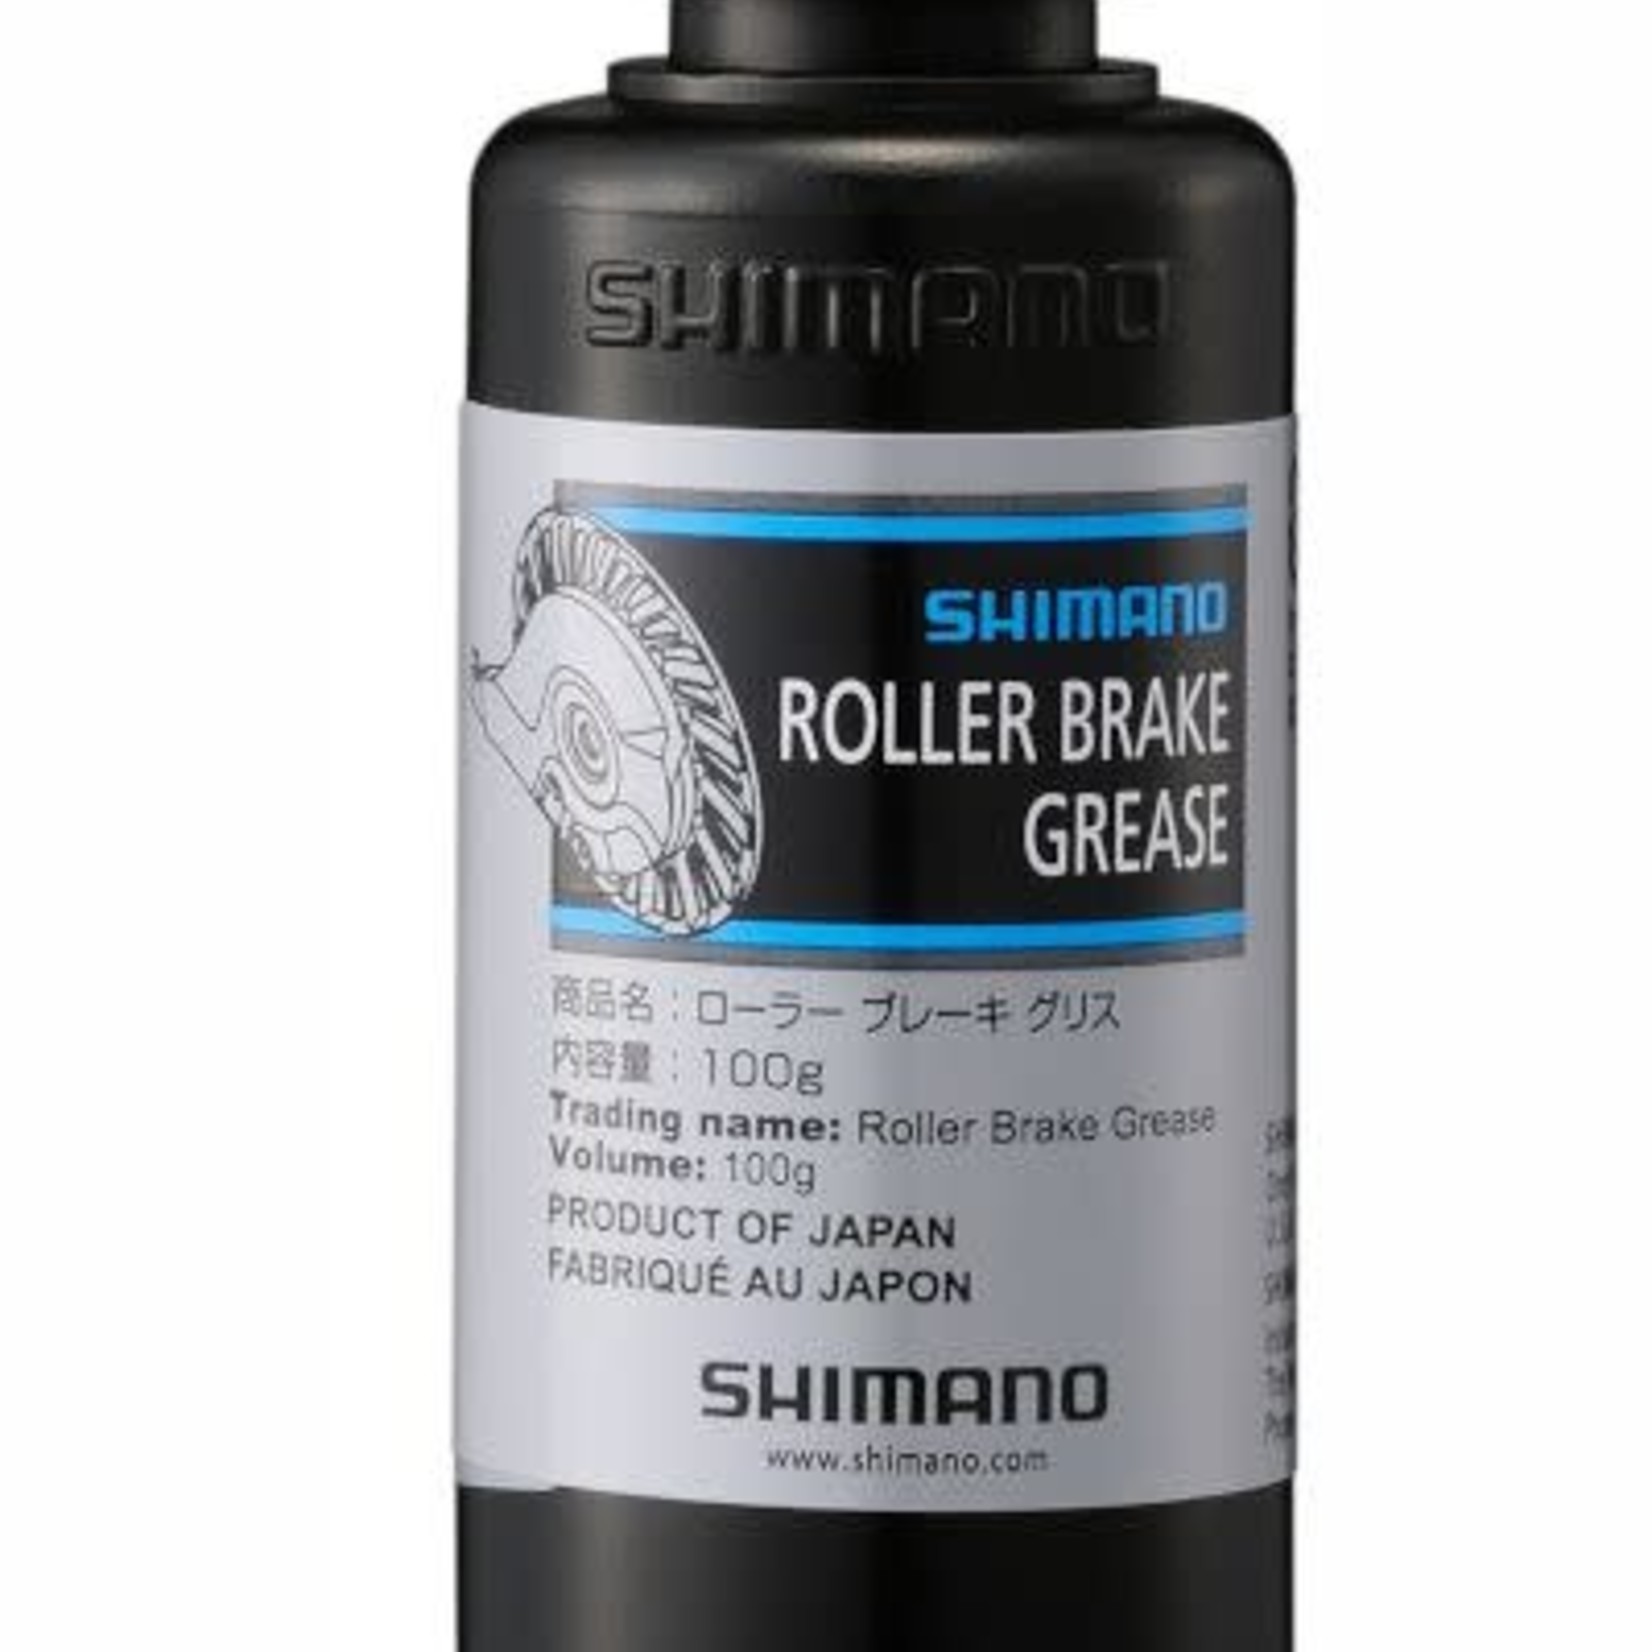 Shimano ROLLER BRAKE GREASE 100G FOR NEXUS/NEXAVE BRAKES